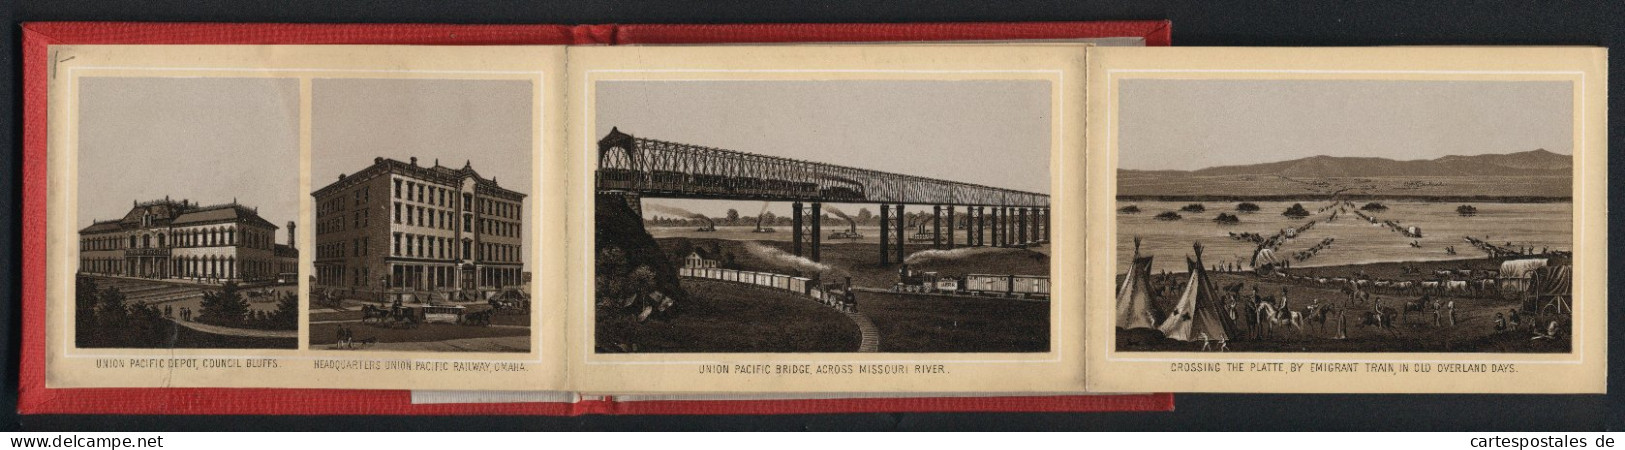 Leporello-Album Union Pacific Railwaymit 24 Lithographie-Ansichten, Headquarter Omaha, Weber Canon, Devils Gate, Ogden  - Lithographies